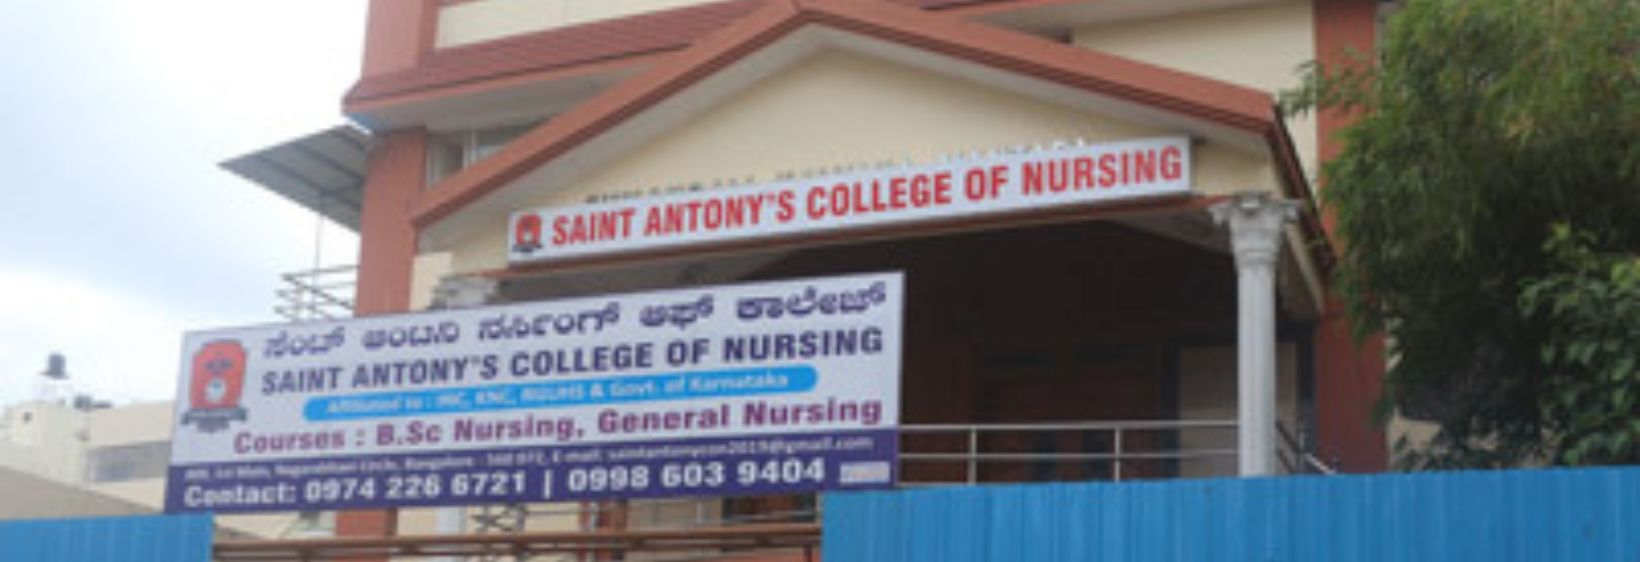 Saint Antony's College of Nursing - Bangalore